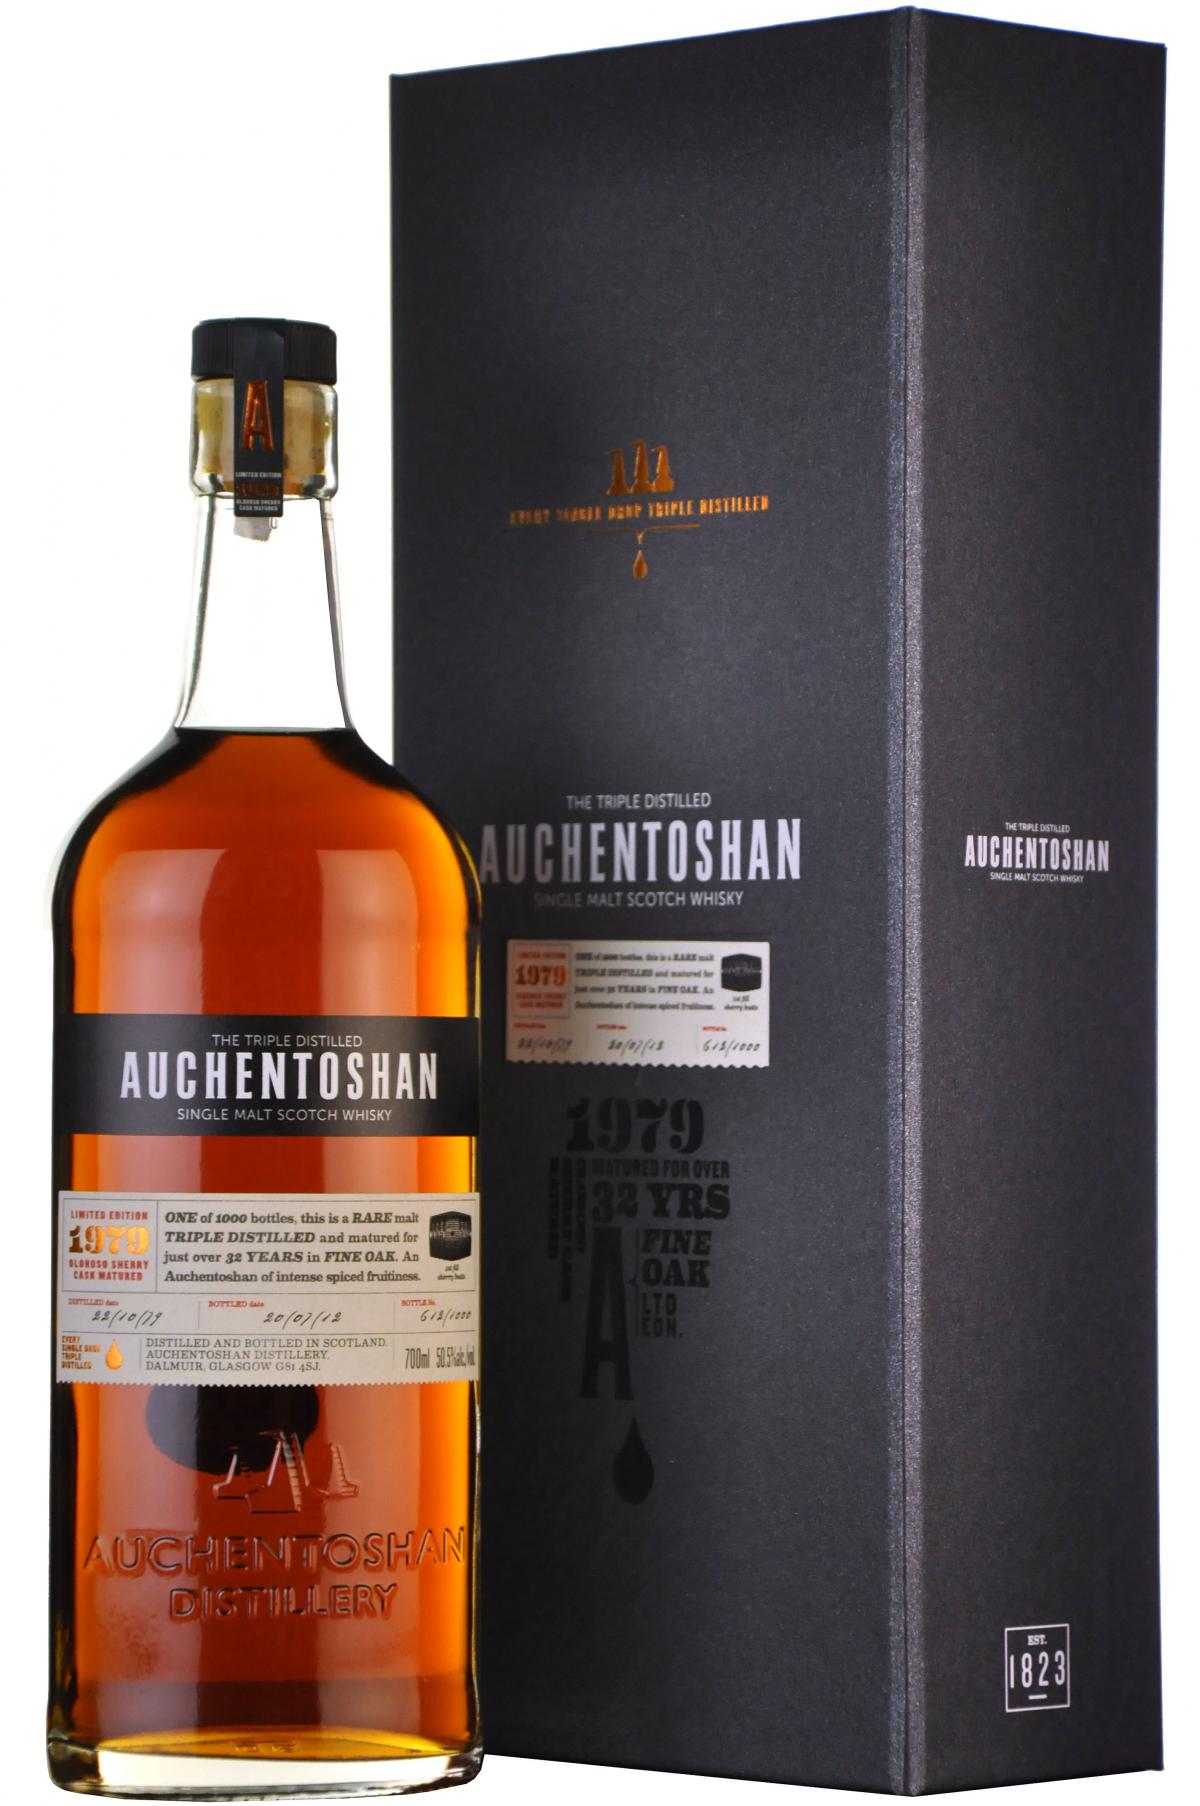 auchentoshan distilled 1979 bottled 2012 32 year old, first fill sherry cask lowland single malt scotch whisky whiskey